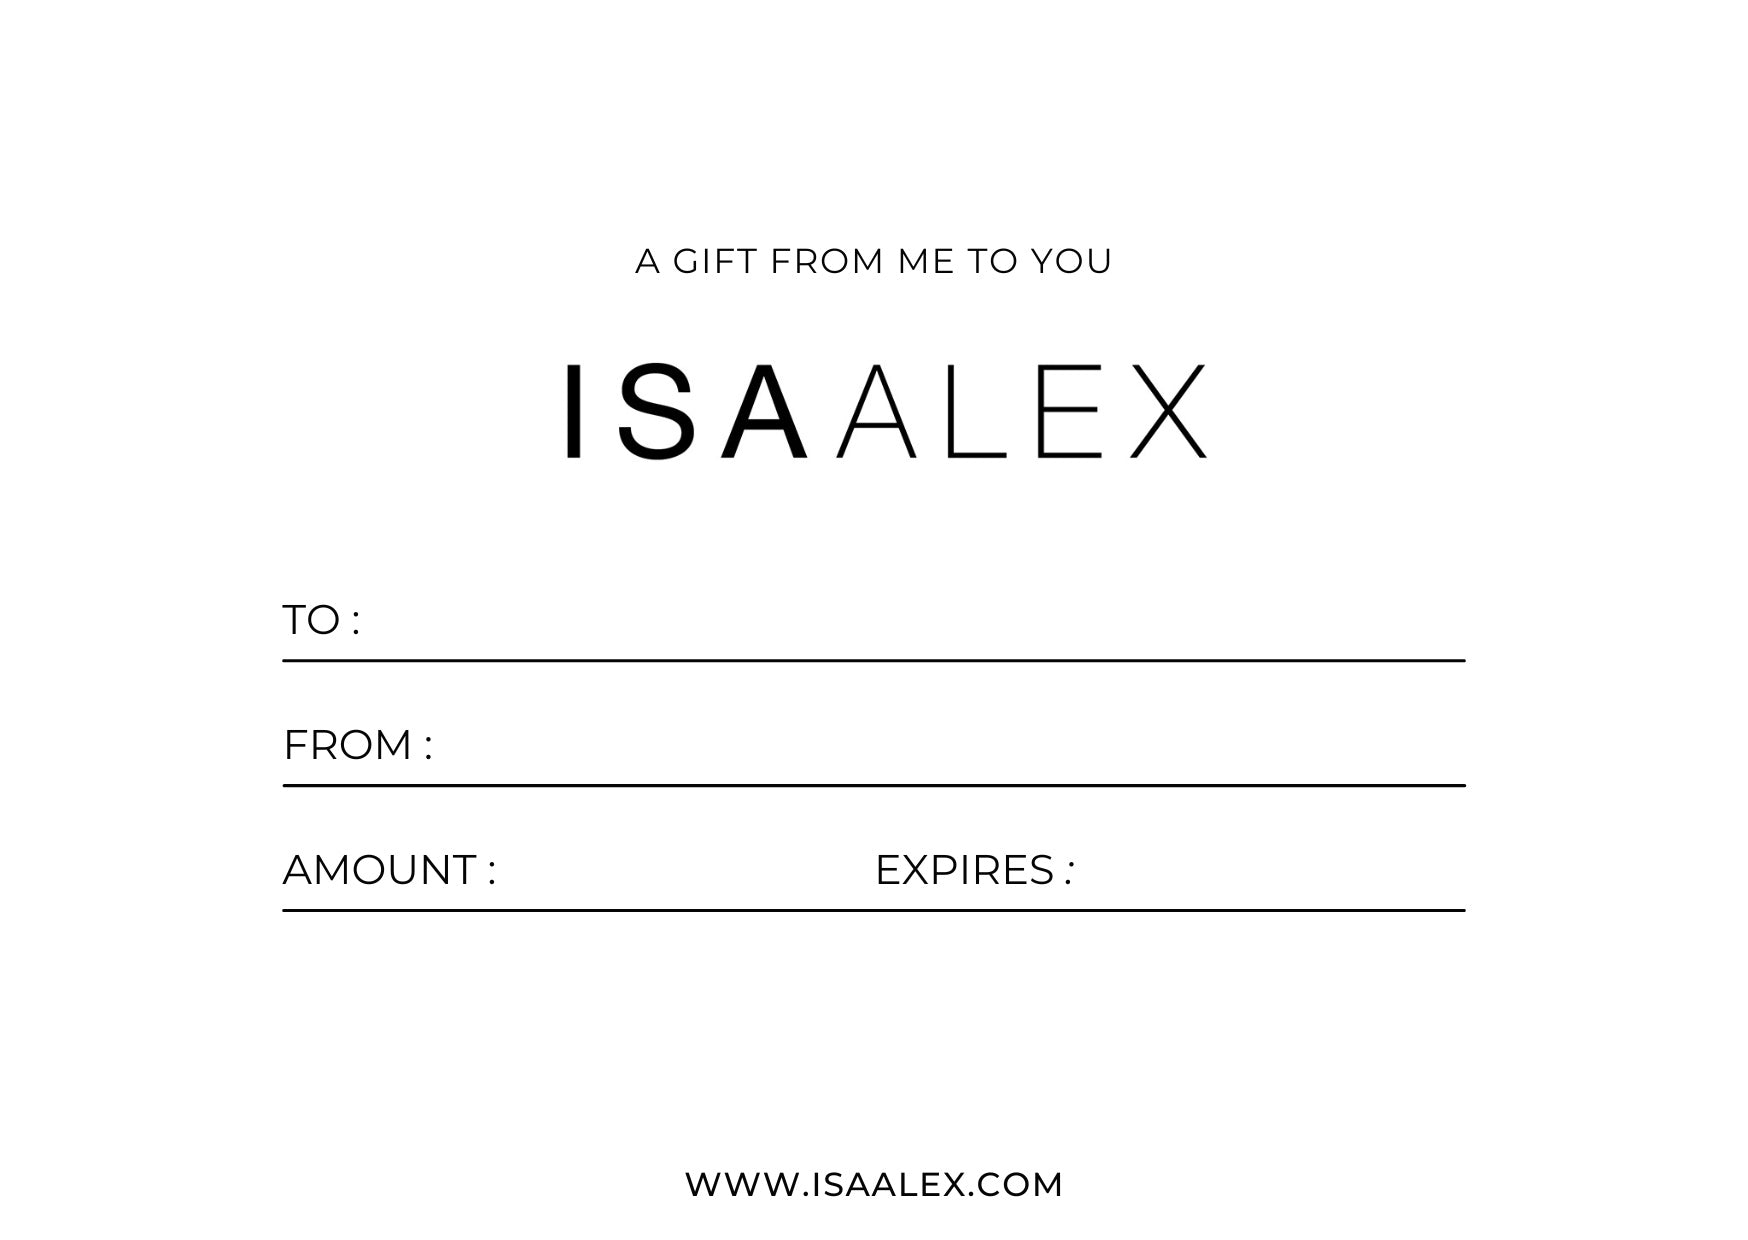 ISA ALEX Gift Card